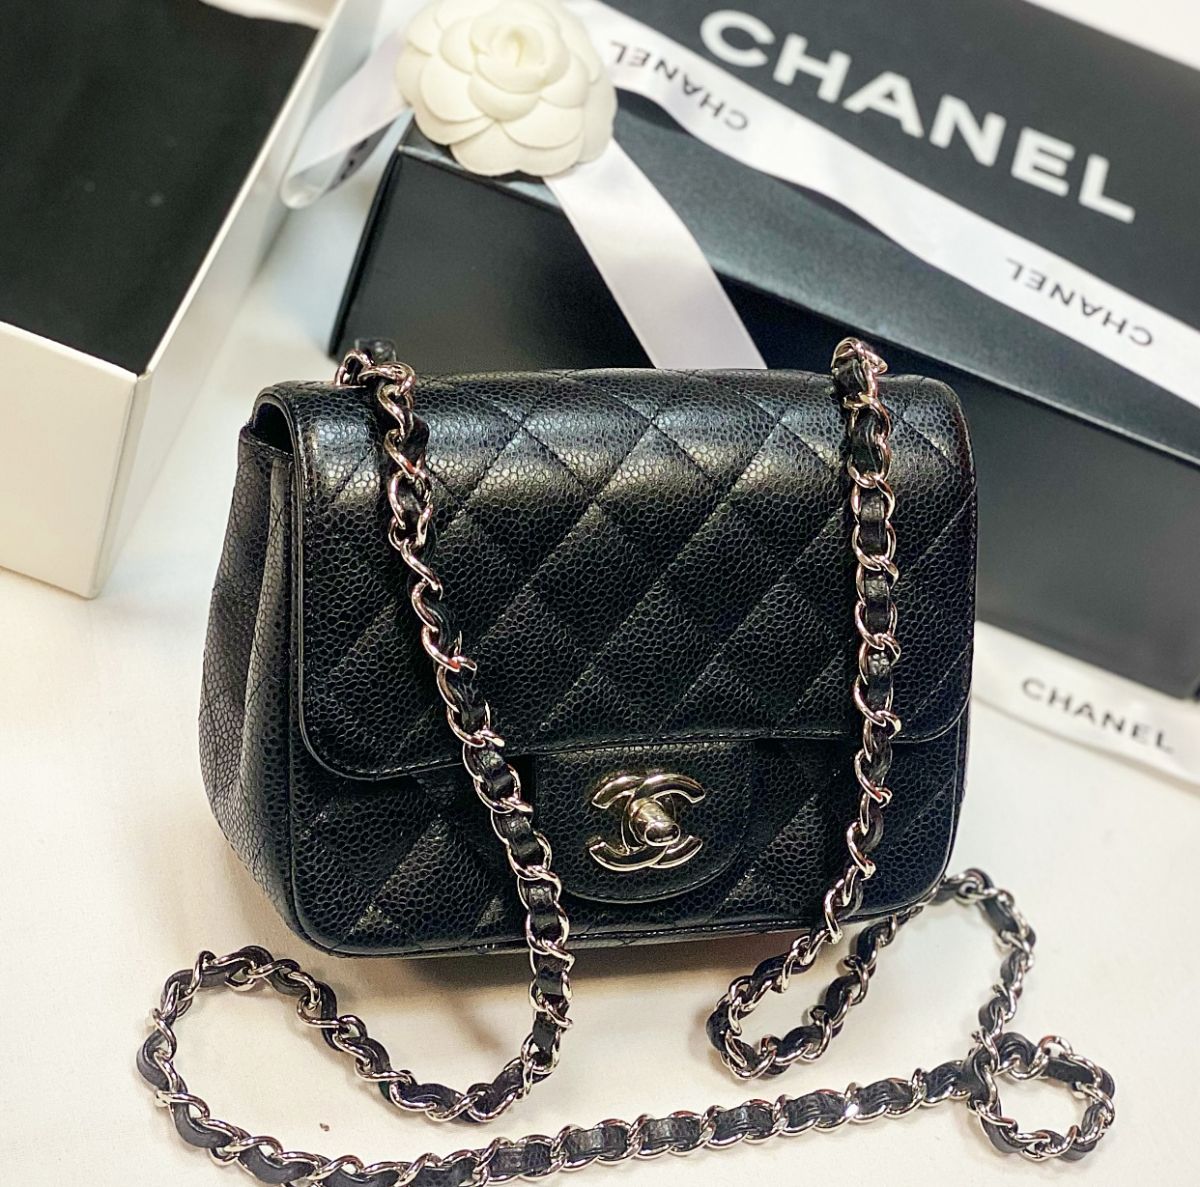 Сумка Chanel размер 17/13 цена 153 847 руб 